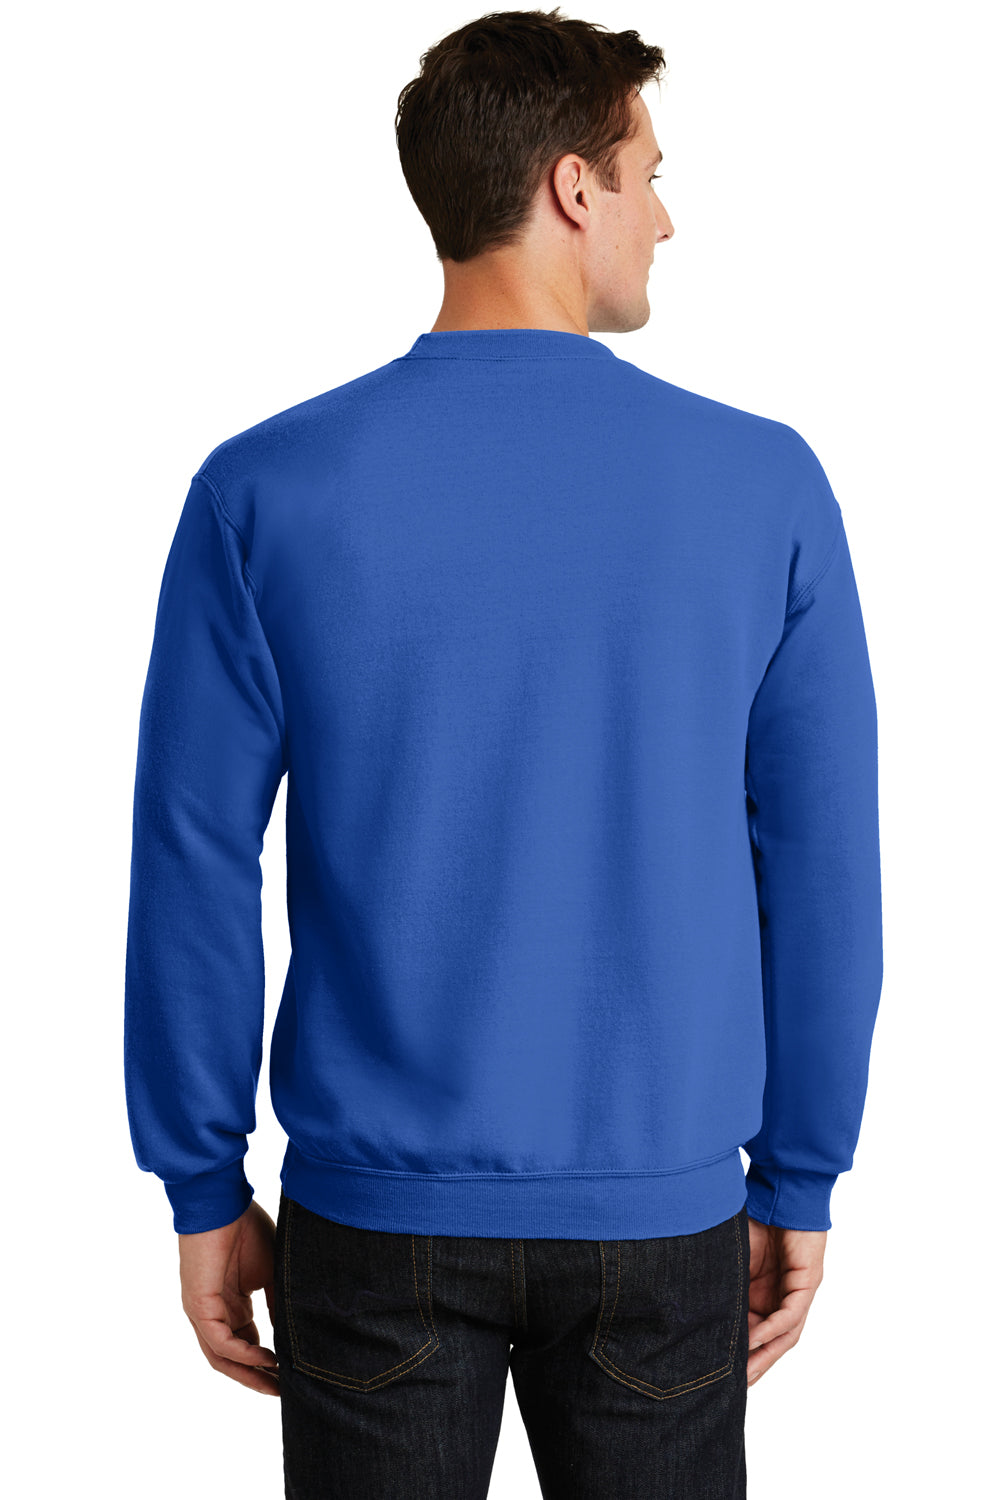 Port & Company PC78 Mens Core Fleece Crewneck Sweatshirt Royal Blue Back